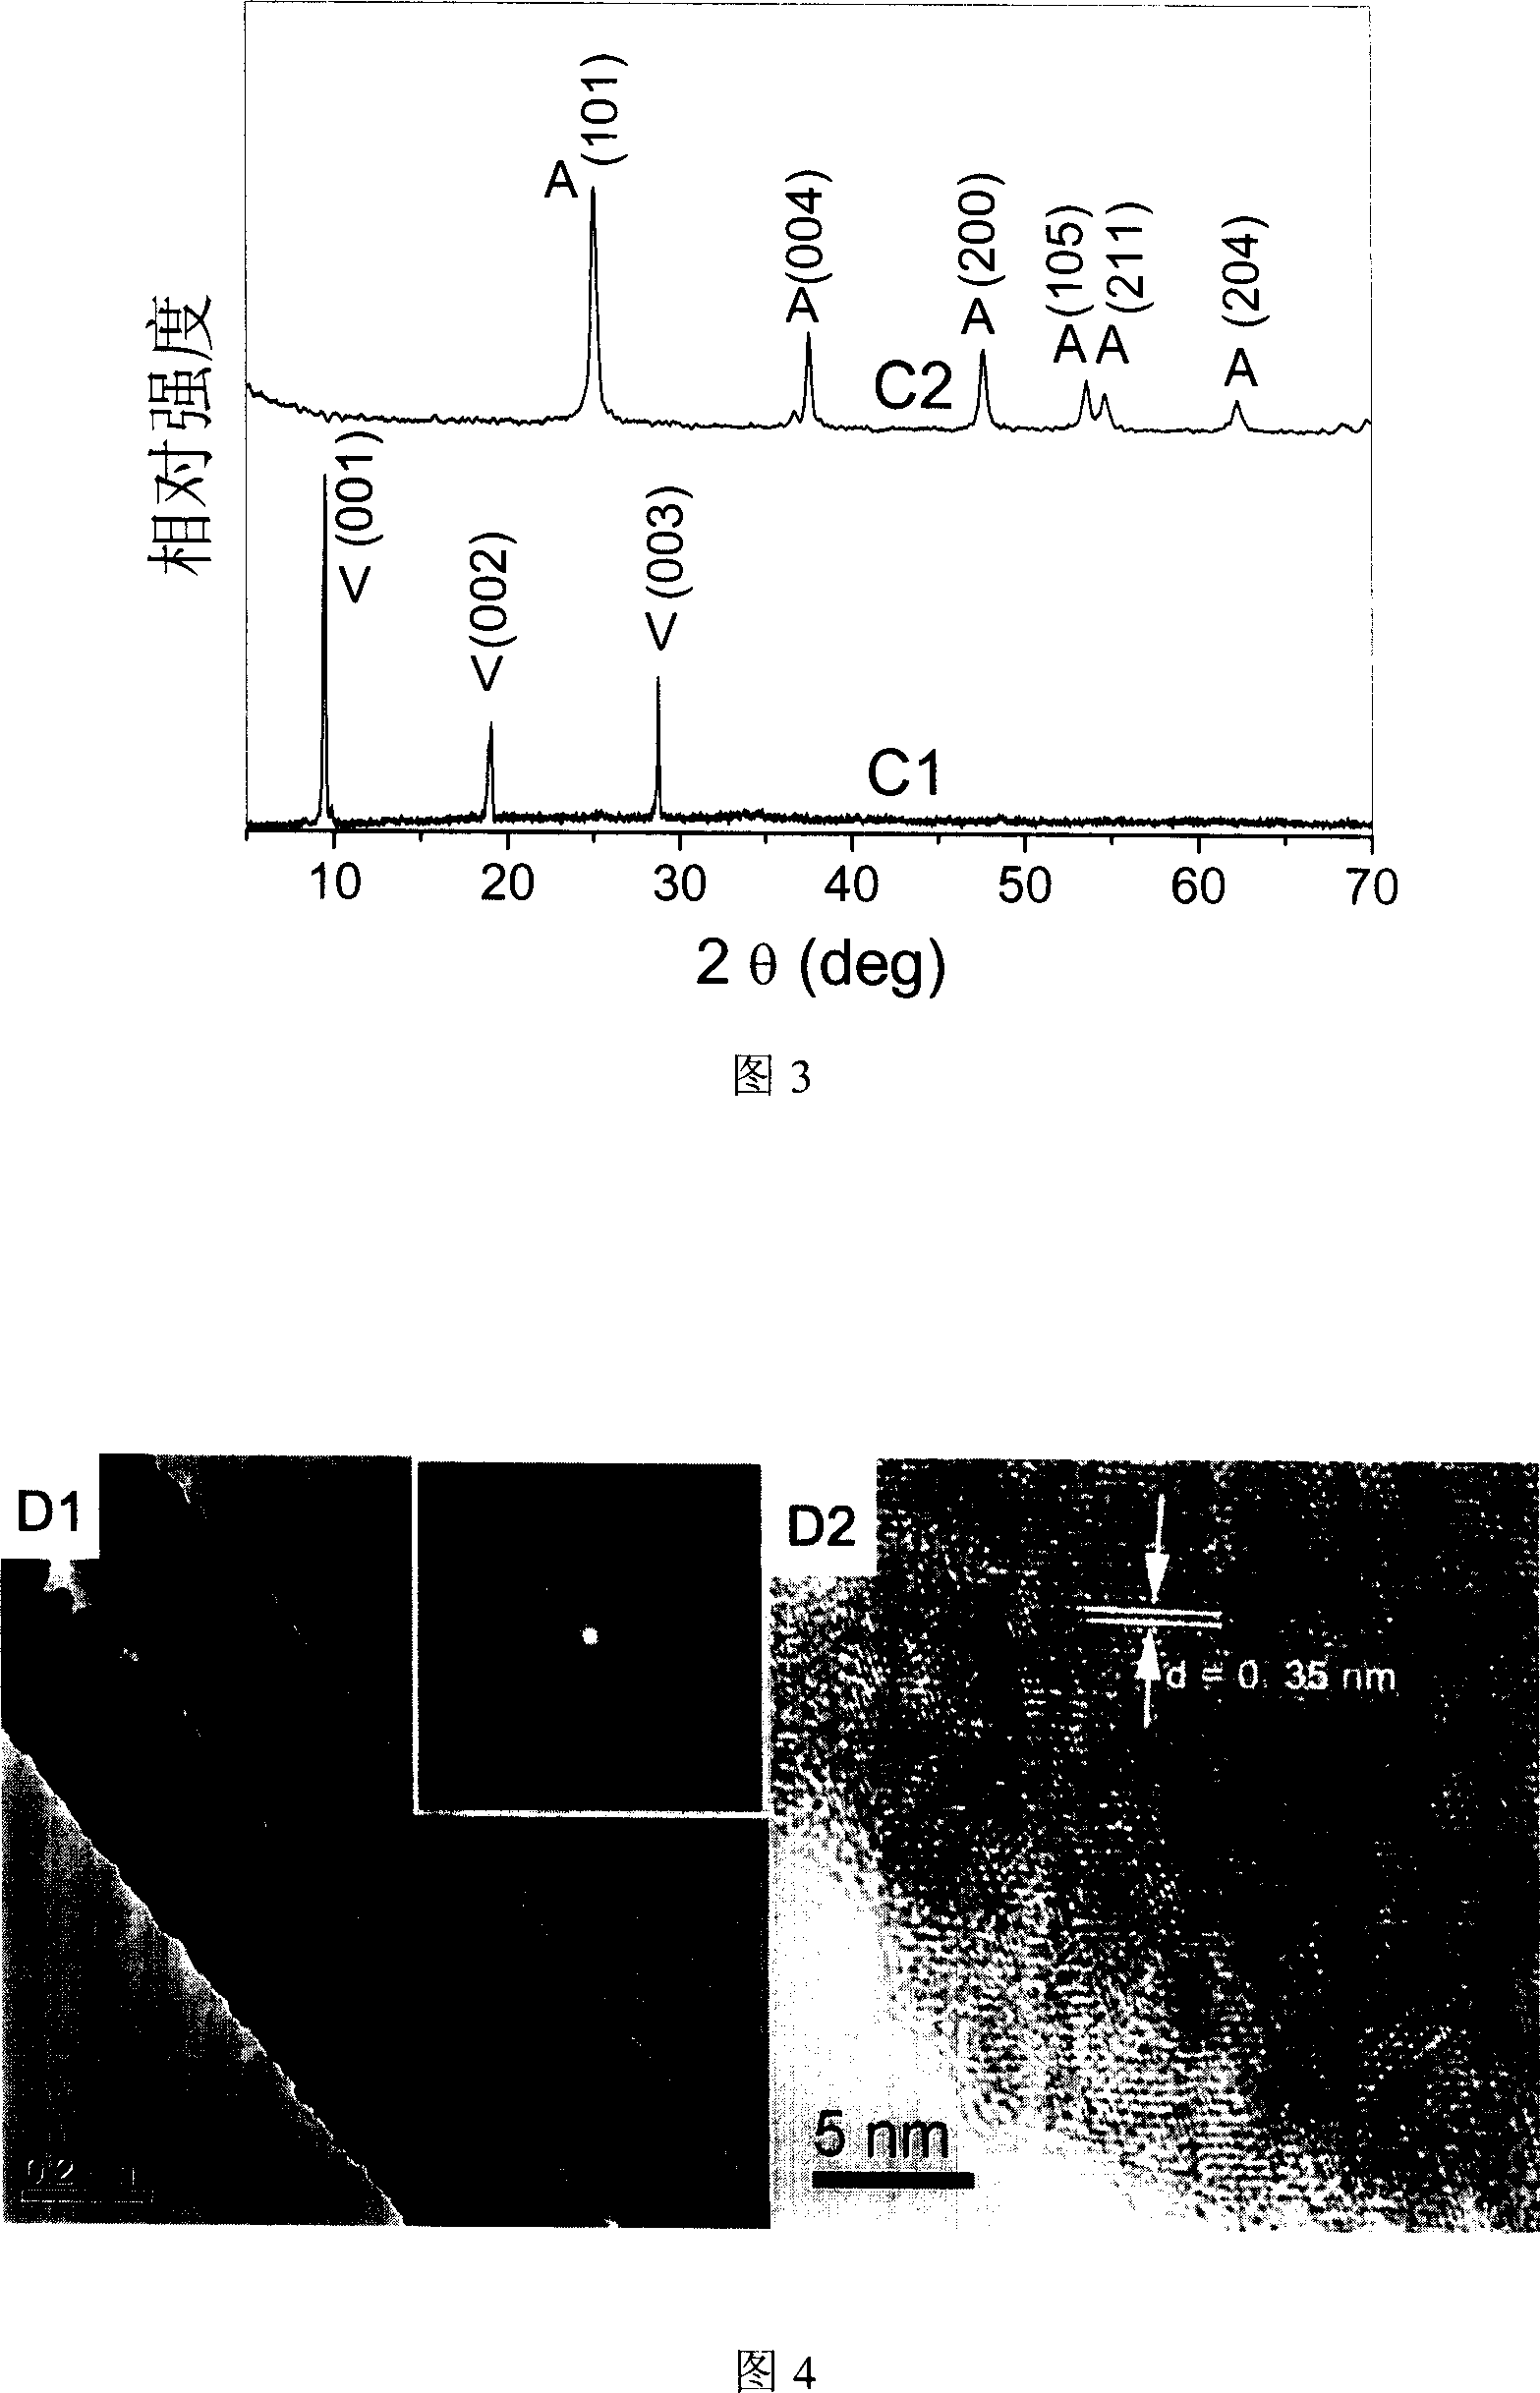 Method for preparing unidimensional TiO2 hollow structured photocatalyst using vanadium oxide nanobelt as template